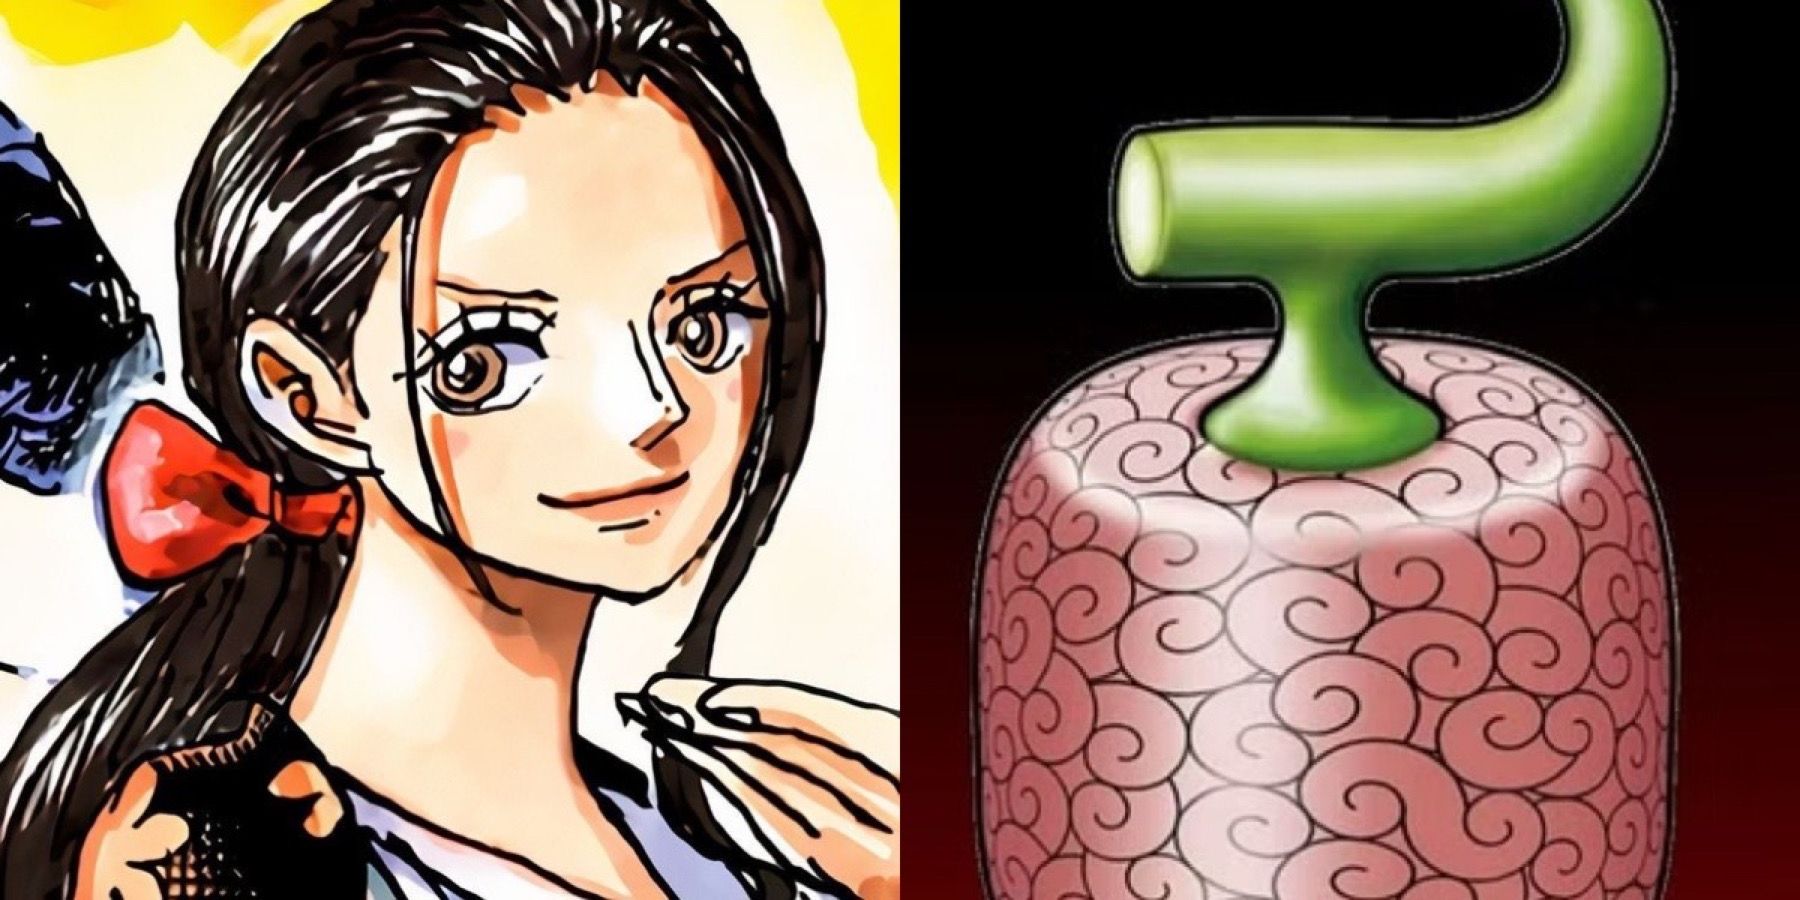 One Piece: Nico Robin's Devil Fruit, Explained